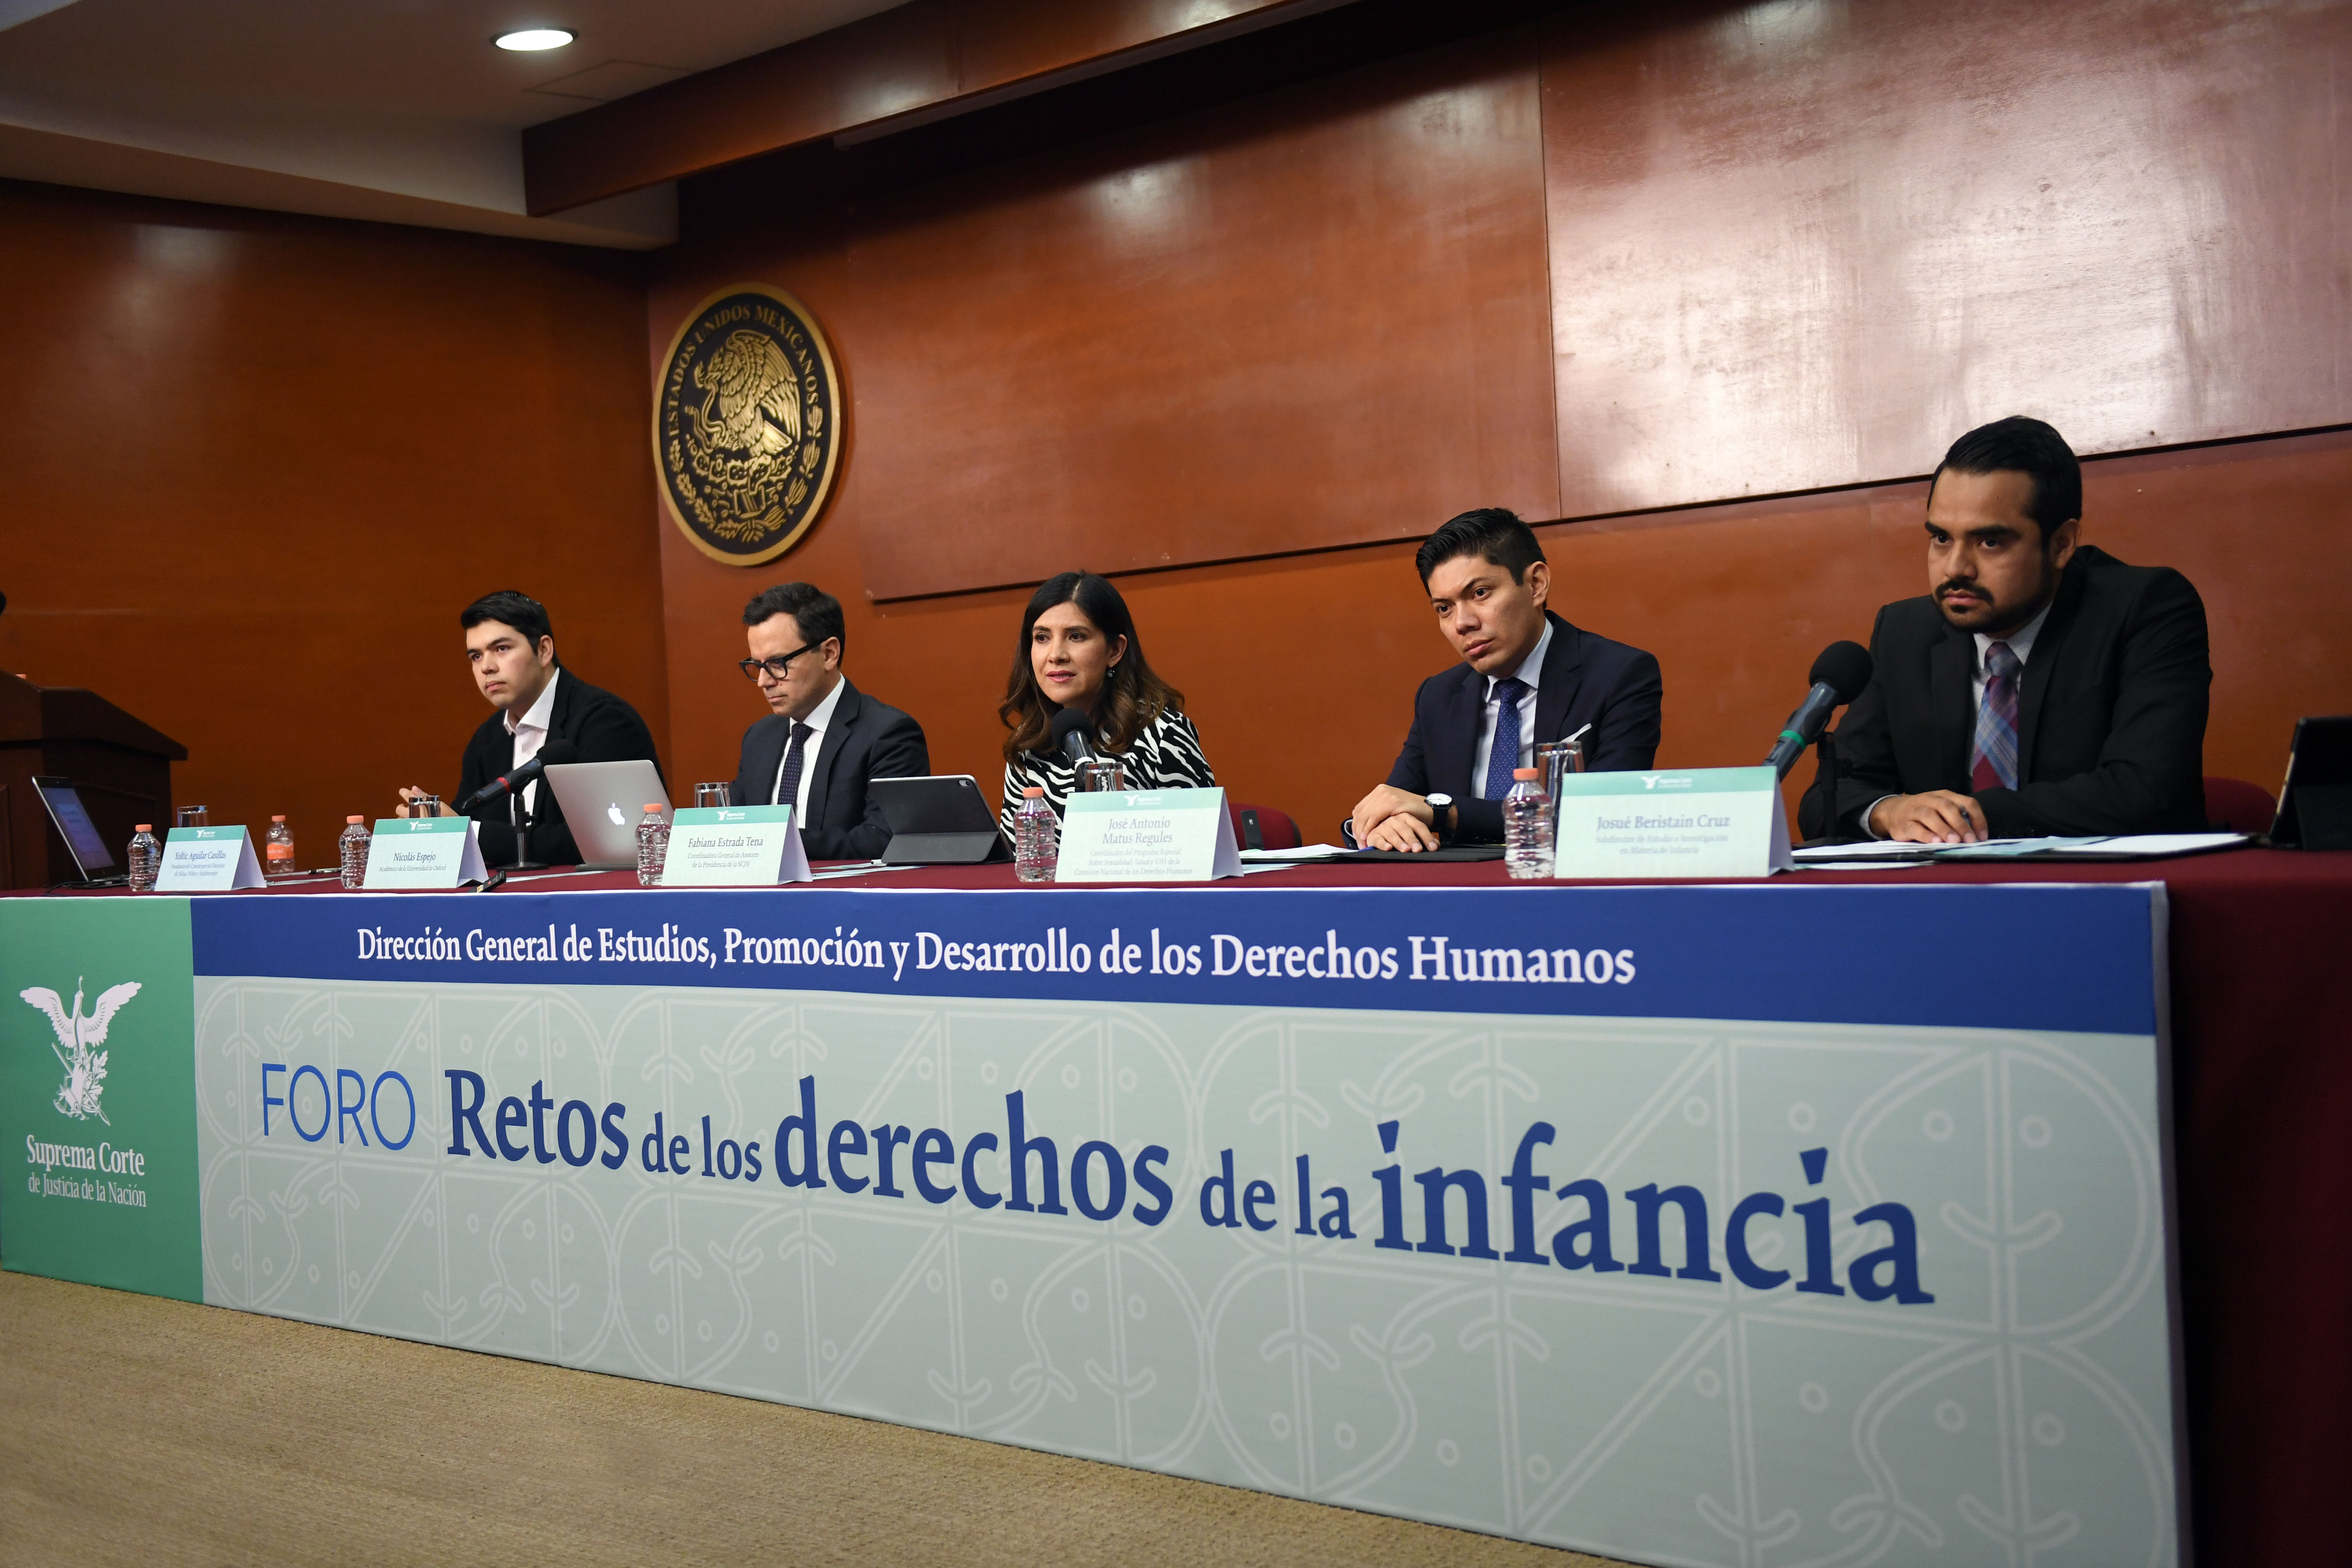 Yoltic Aguilar Casillas, Nicolás Espejo, Fabiana Estrada Tena, José Antonio Matus Regules, Josué Beristain Cruz